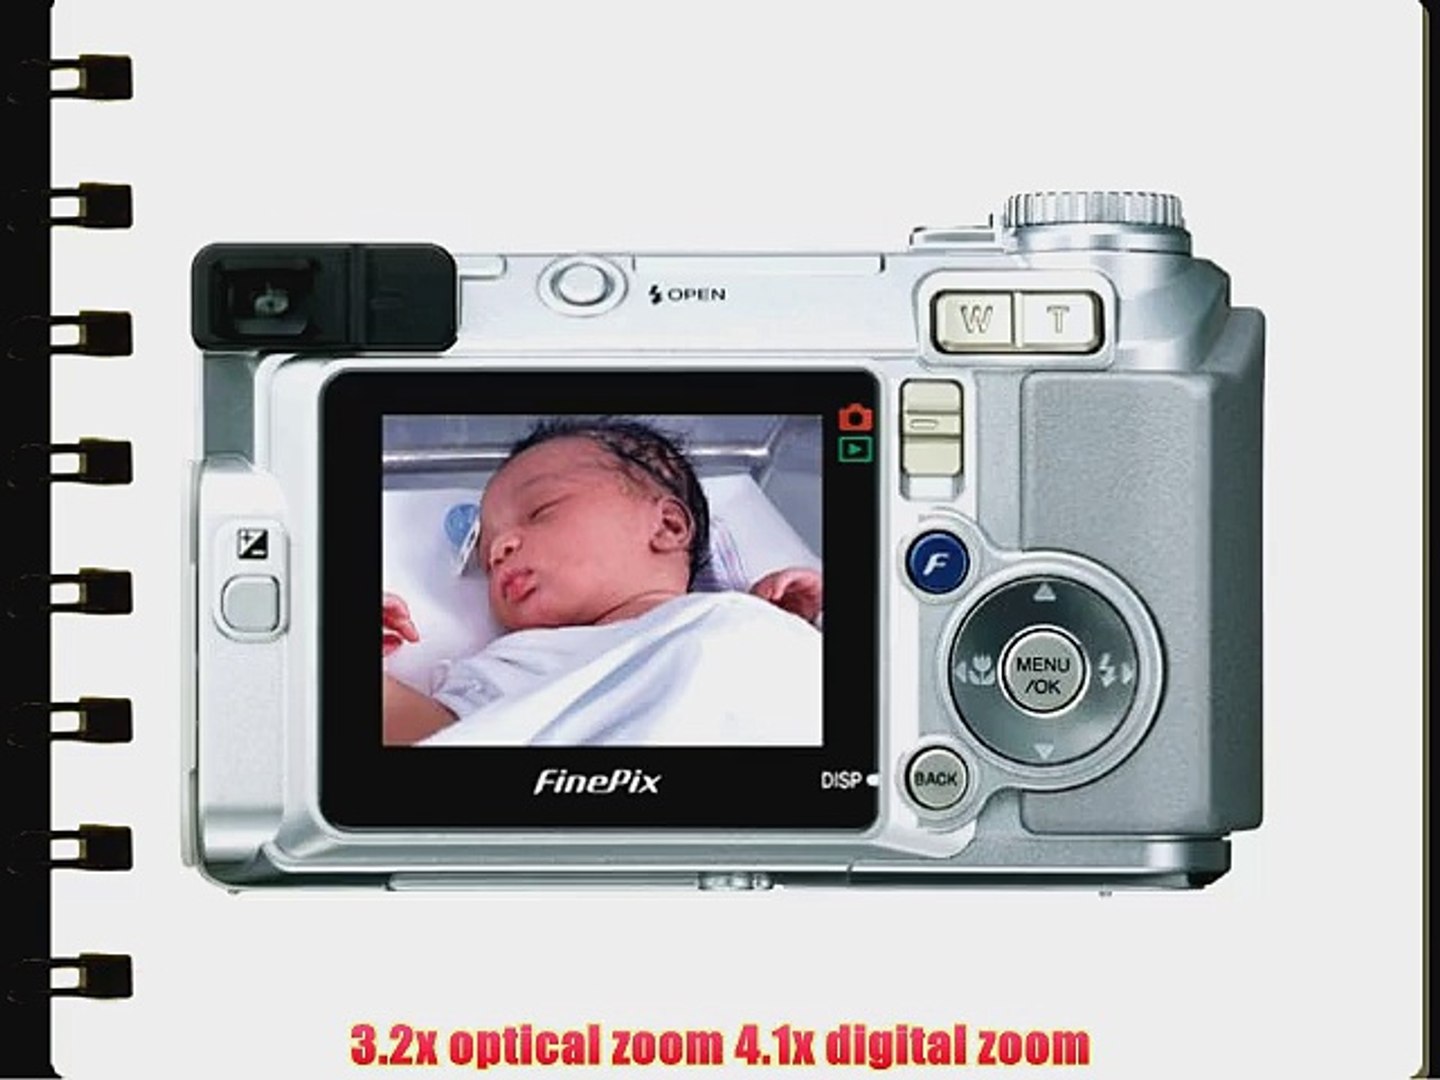 temperament test Geurig Fujifilm Finepix E510 5MP Digital Camera with 3.2x Optical Zoom - video  Dailymotion